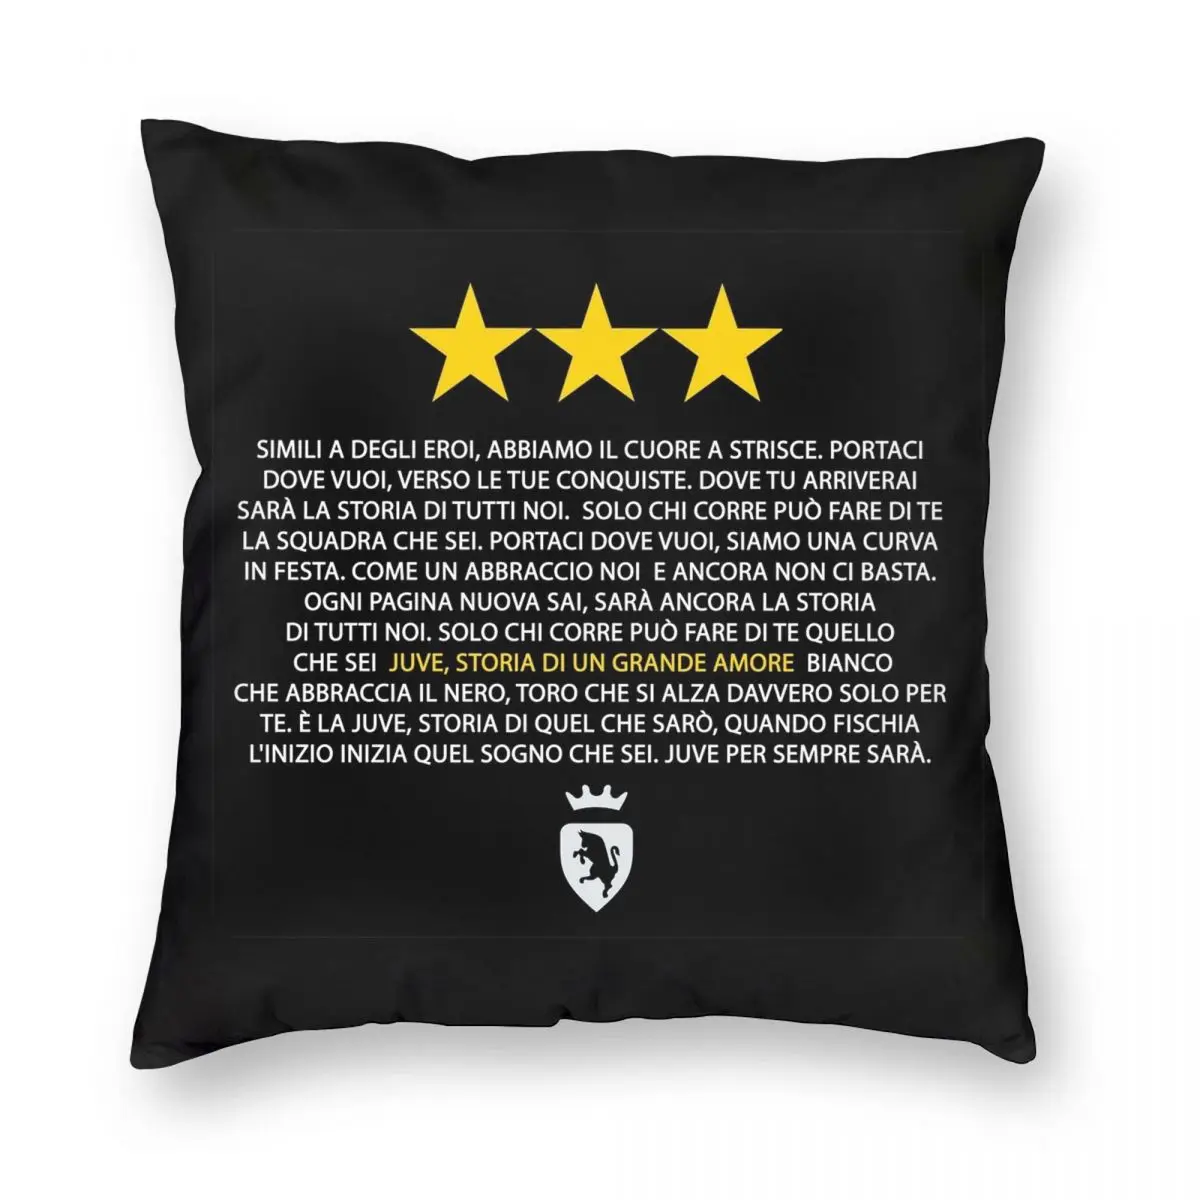 

Juve Storia Di Un Grande Amore Black Pillowcase Polyester Linen Velvet Pattern Zip Decorative Home Cushion Cover